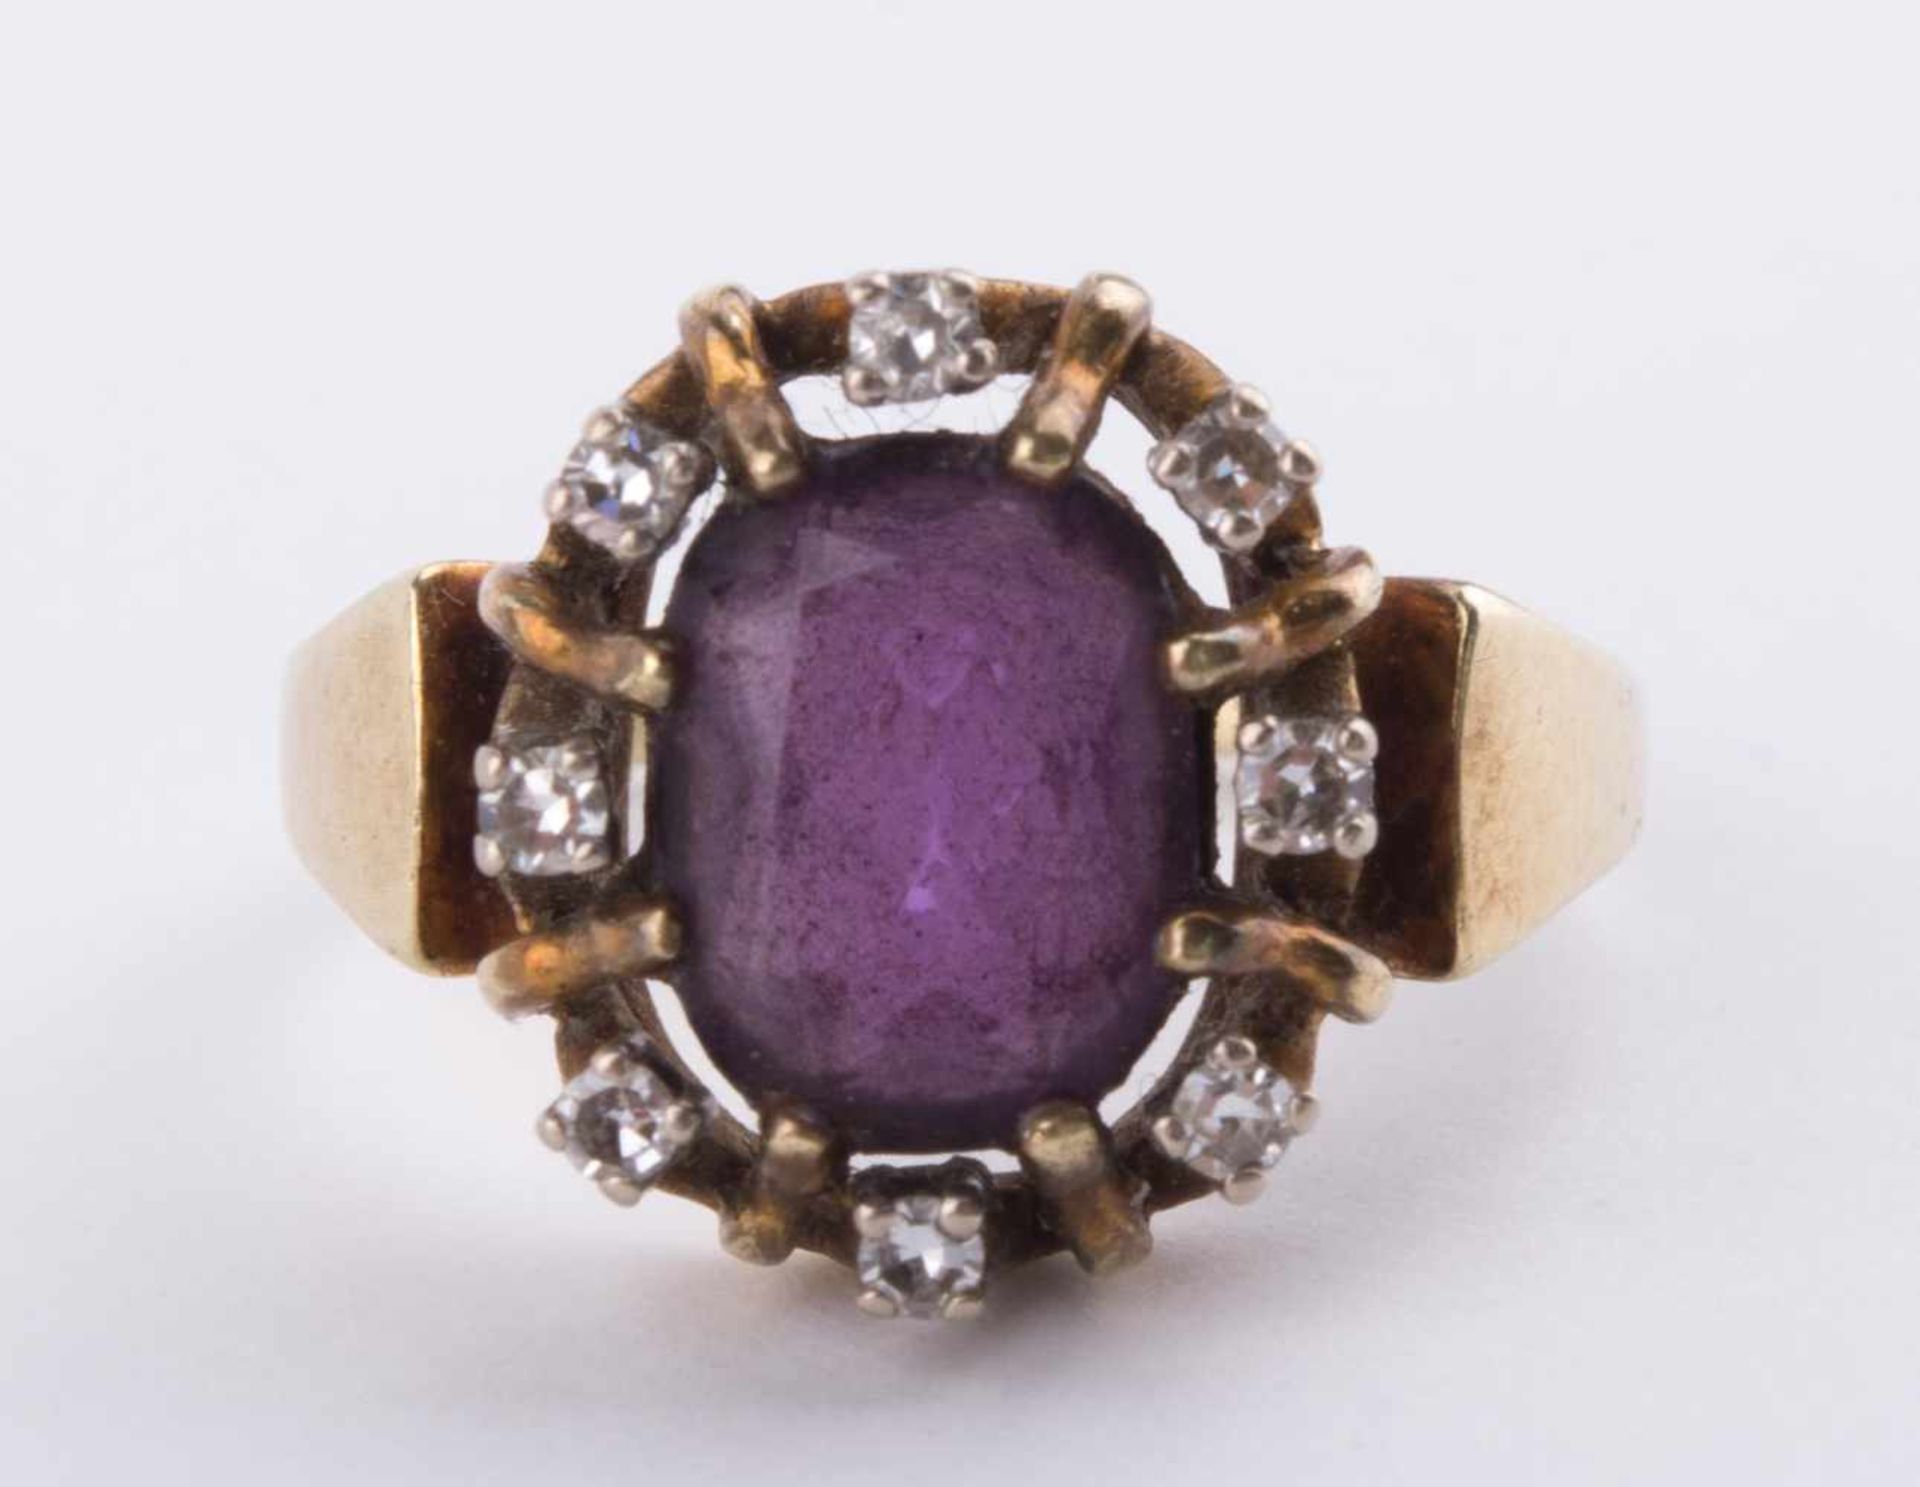 Damen Amethyst-Diamantring / Women's amethyst-diamond gold ring GG 585/000, RG ca. 58, 8 kleine